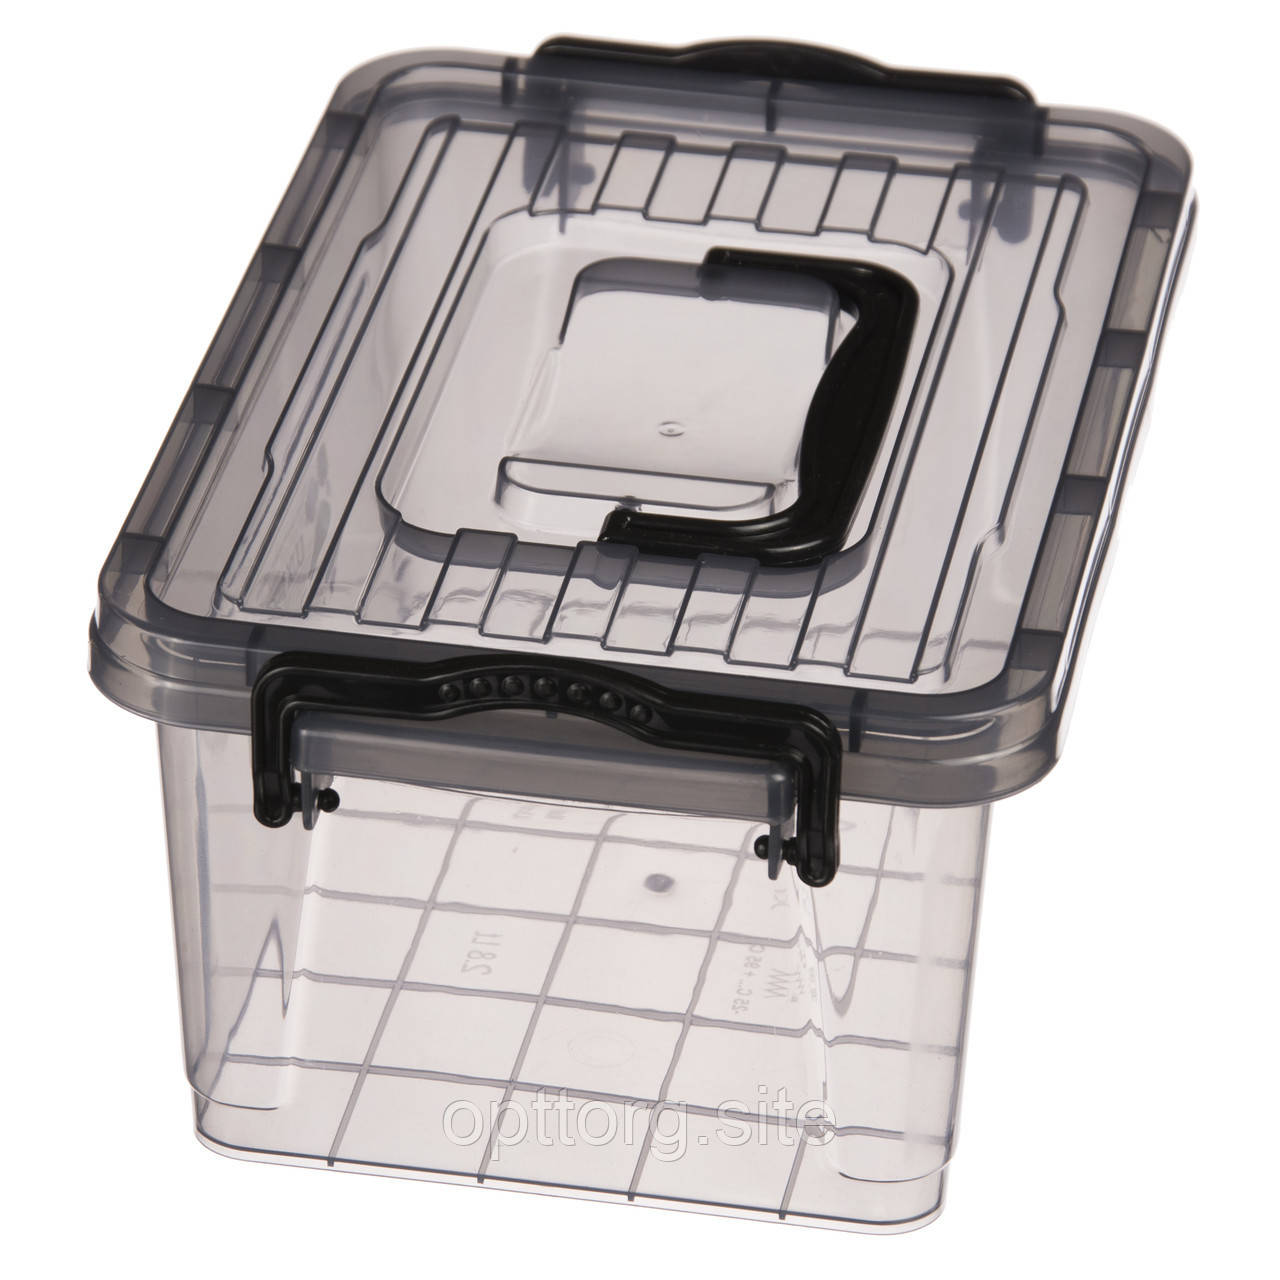 2 x Kronotex-Box con tapa 64 L gris para guardarlas box CAJA 